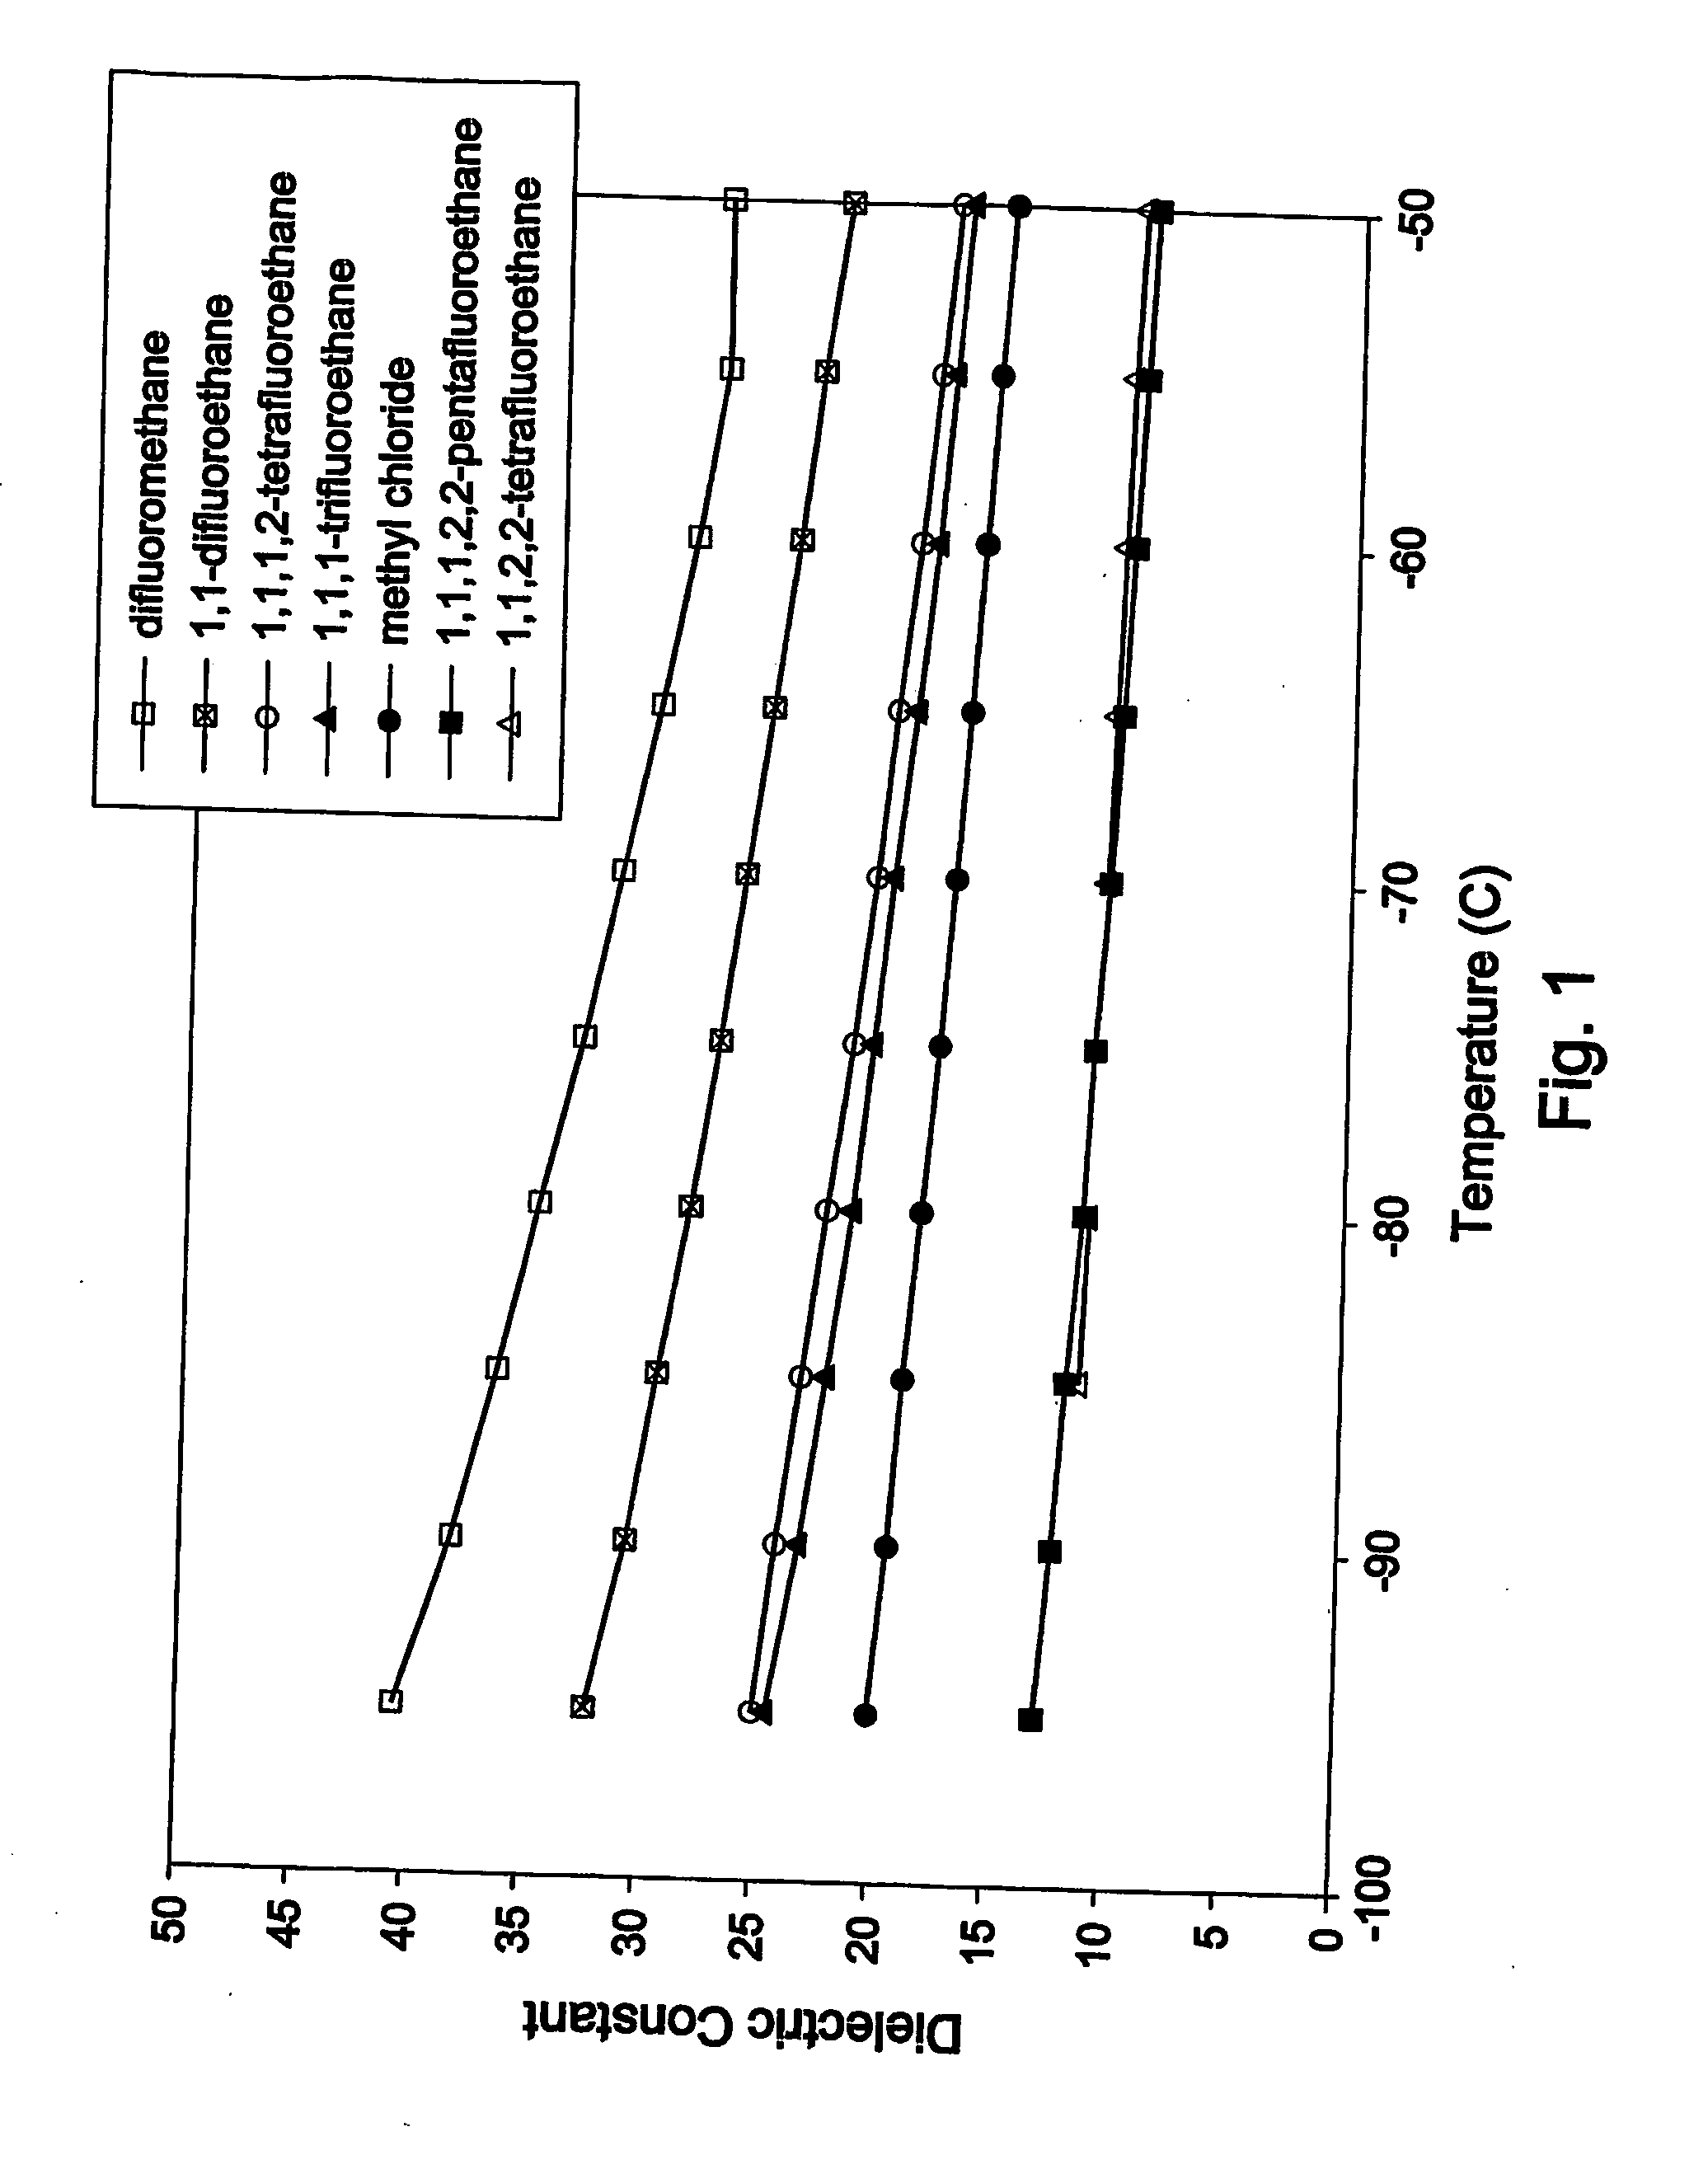 Polymerization processes